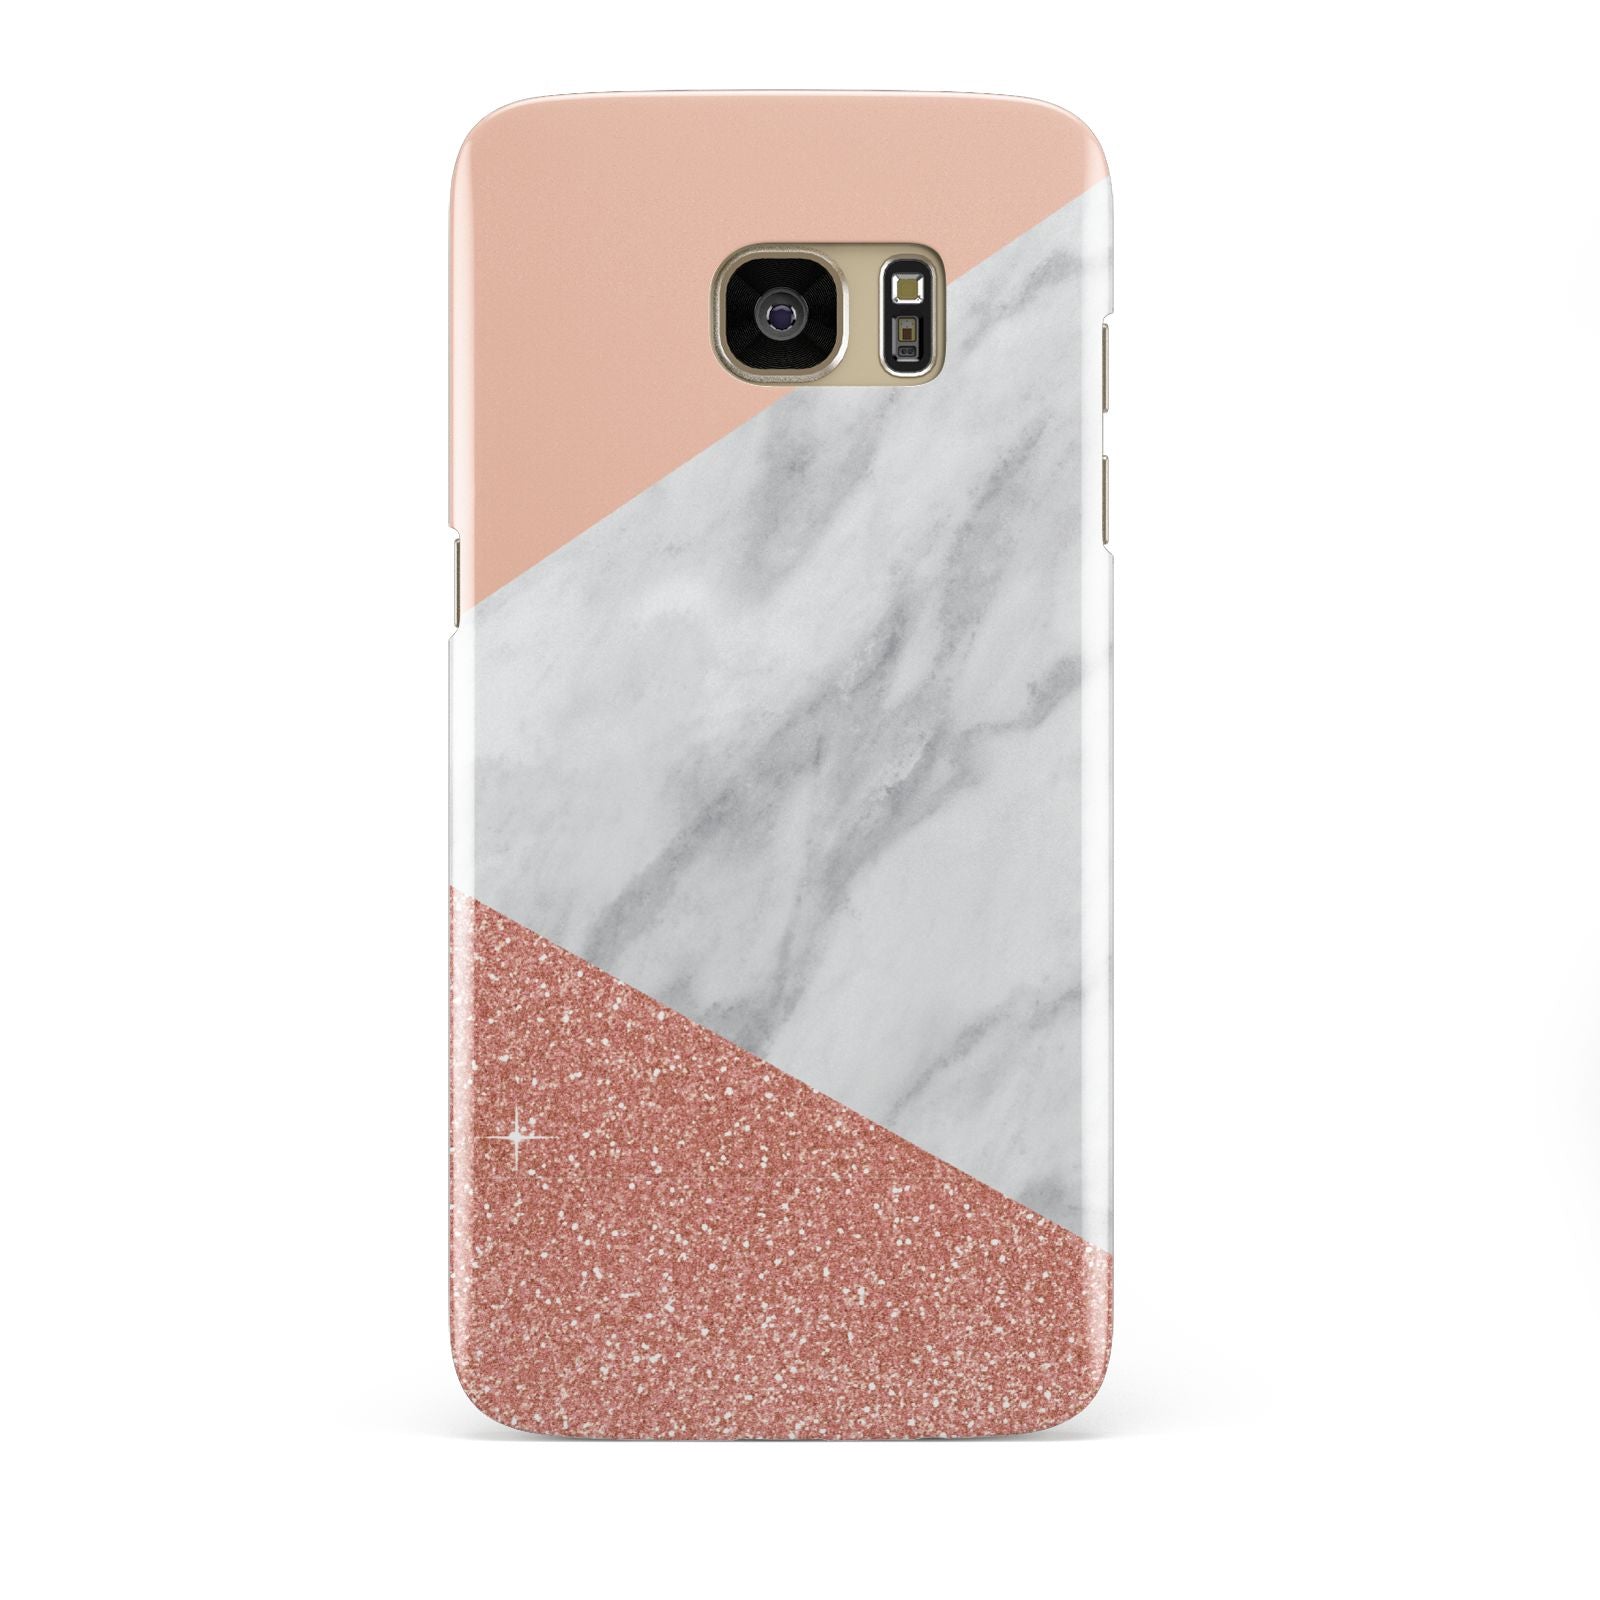 Marble White Rose Gold Samsung Galaxy S7 Edge Case